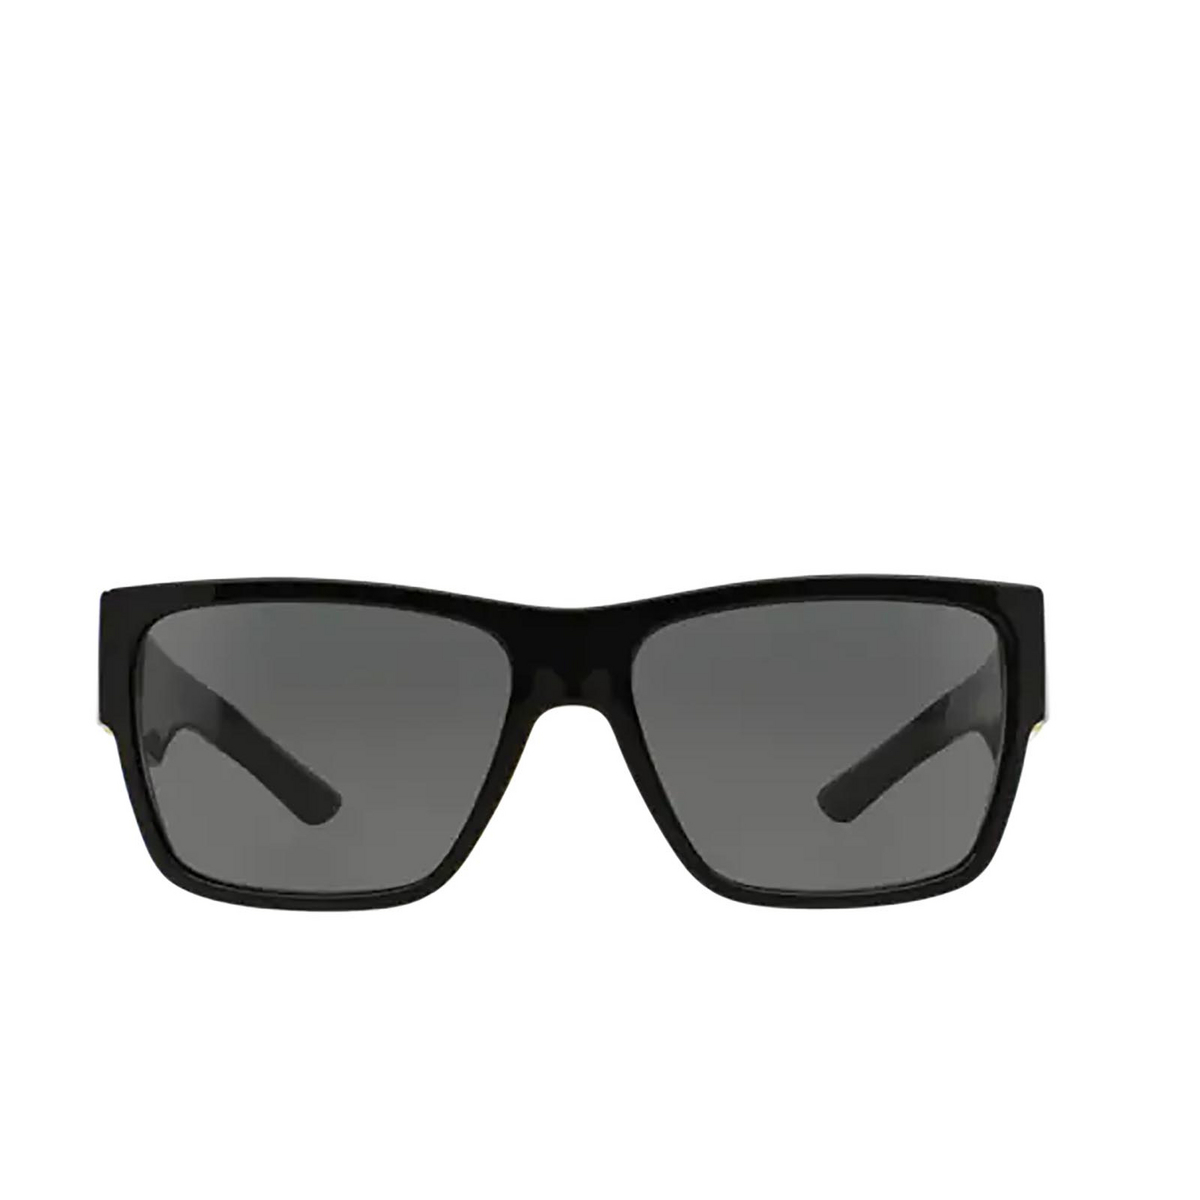 Versace VE4296 Sunglasses GB1/87 Black - front view